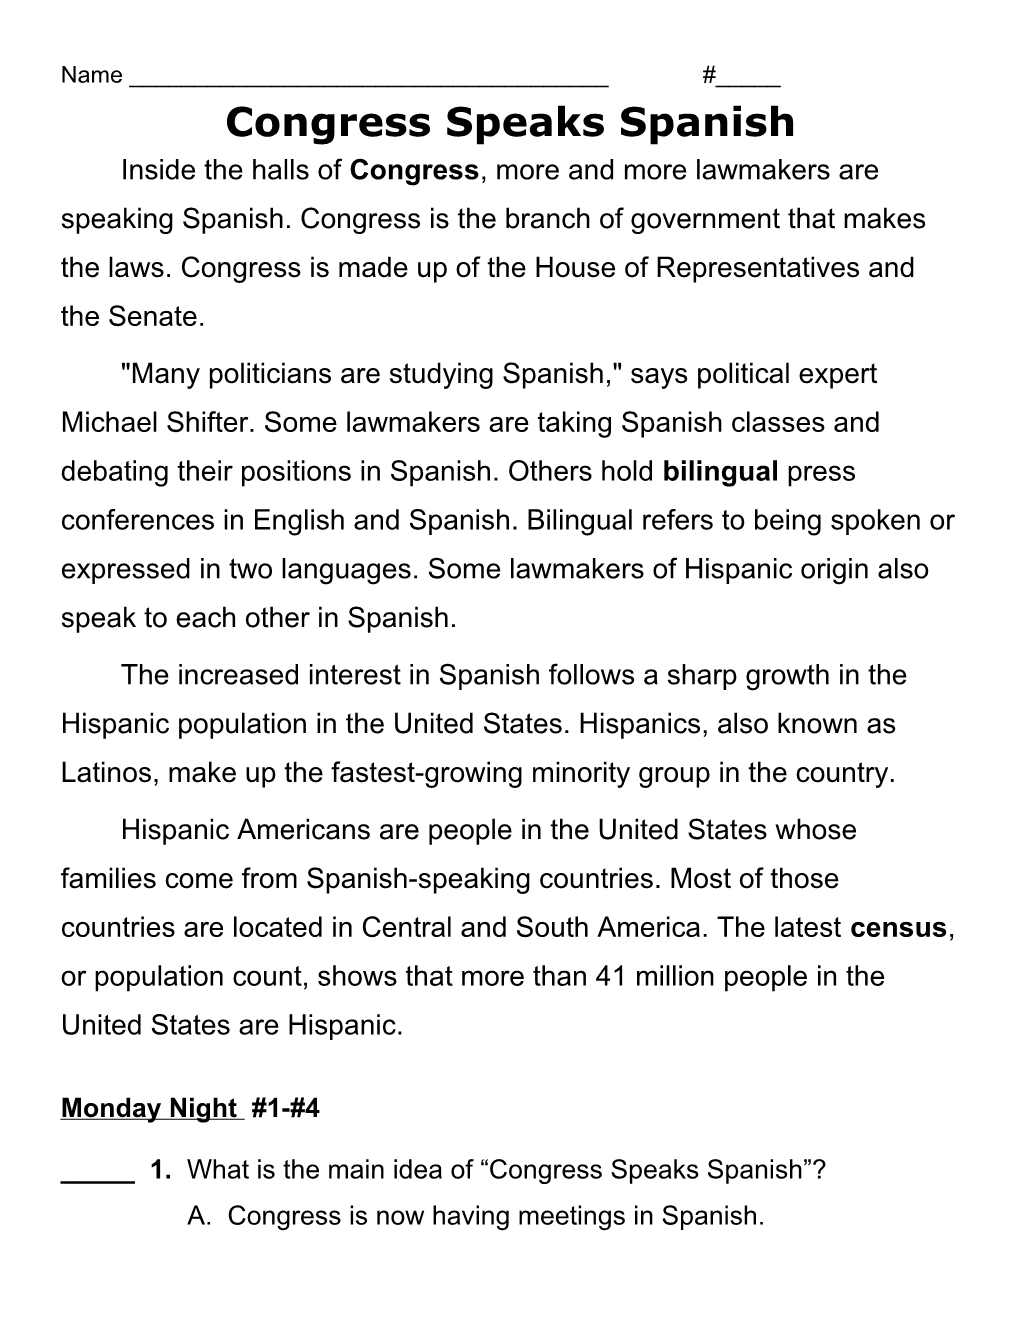 Congress Speaks Spanish